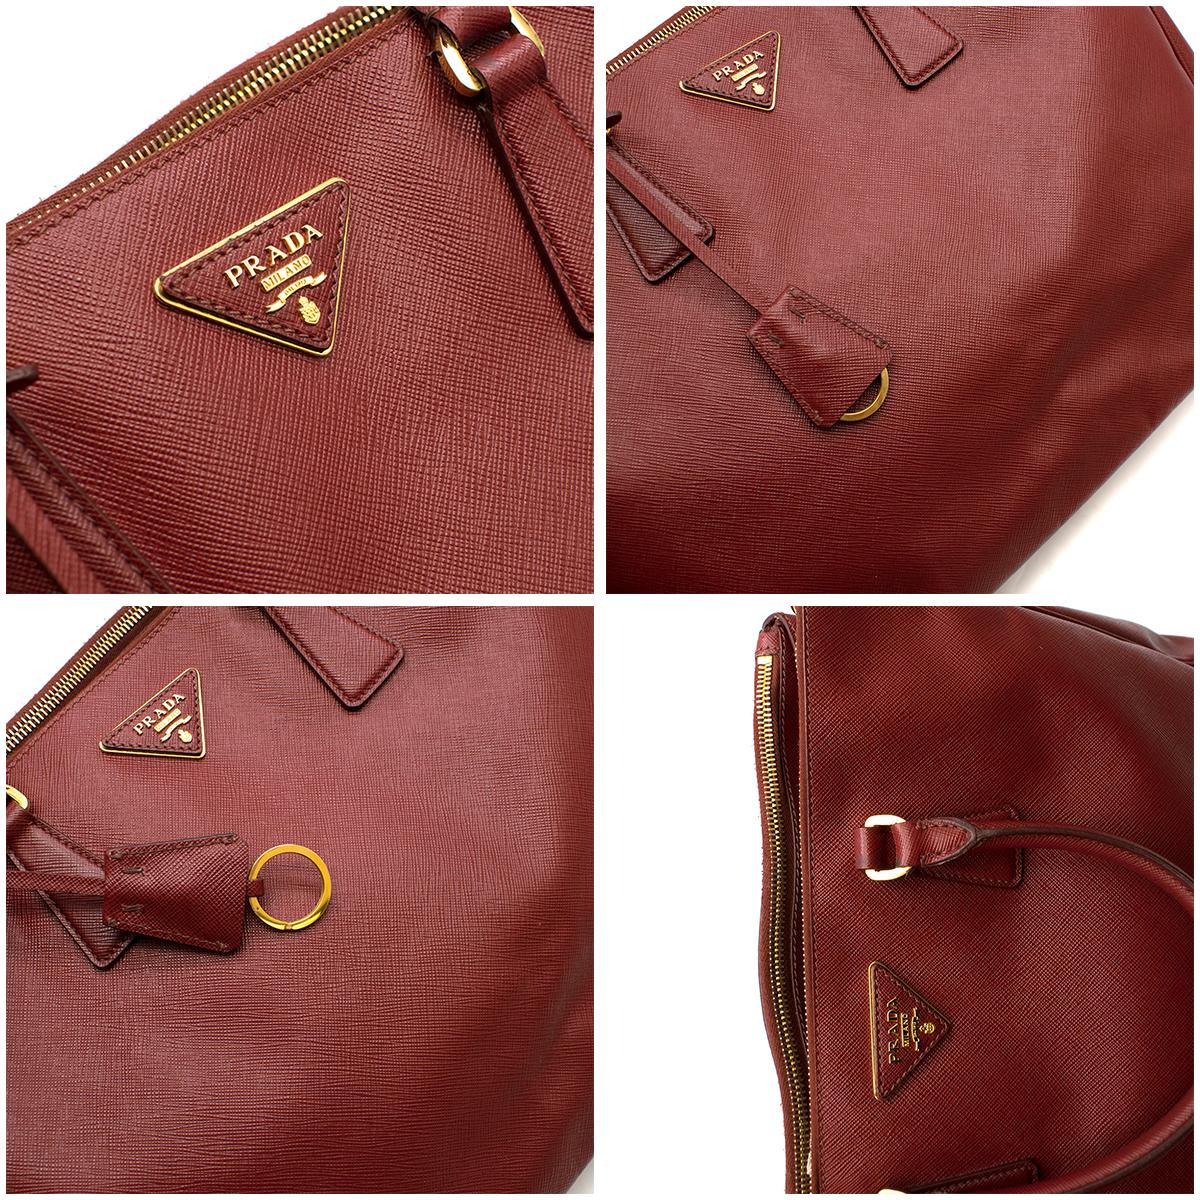 Prada Red Leather Galleria Saffiano Top-handle Bag	 4